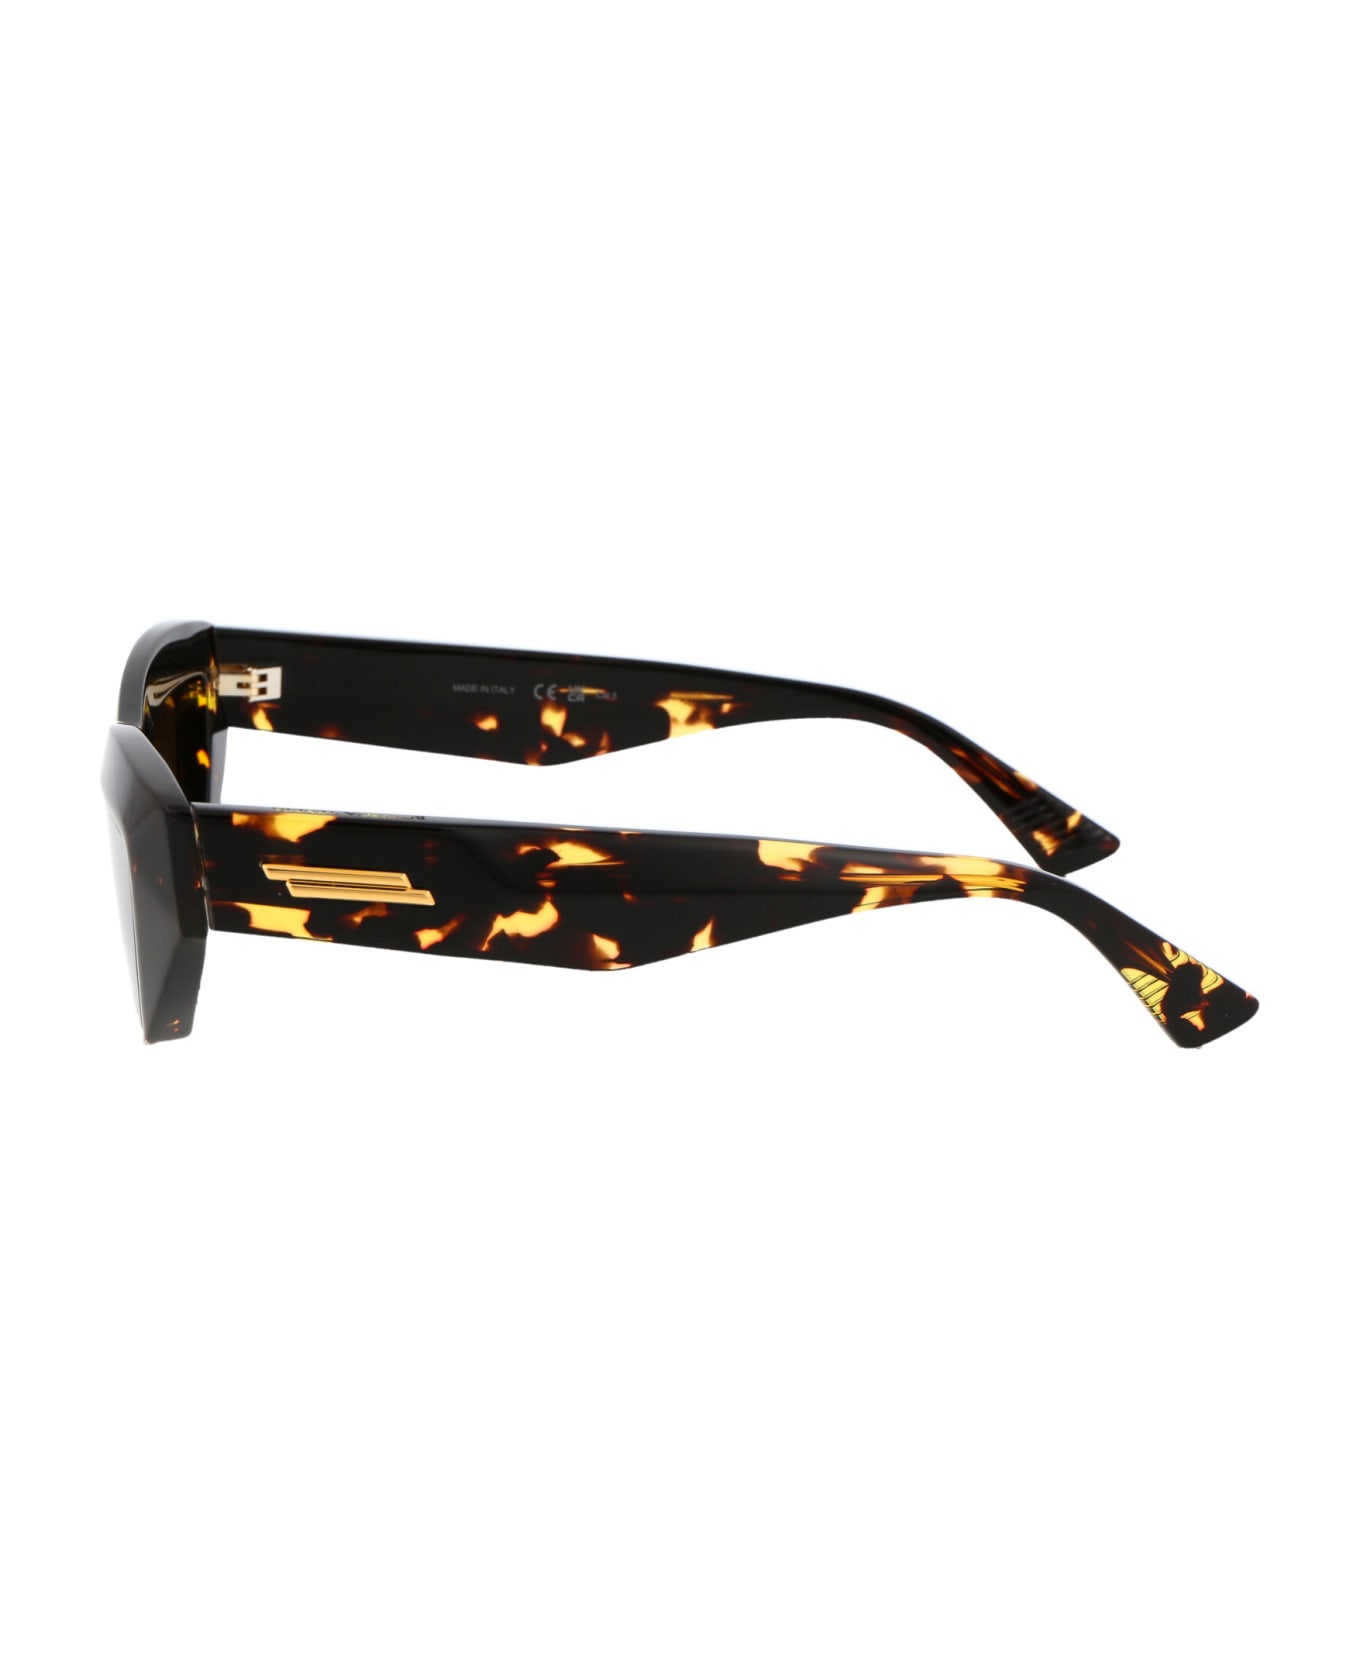 Bottega Veneta Eyewear Bv1219s Sunglasses - 002 HAVANA HAVANA BROWN